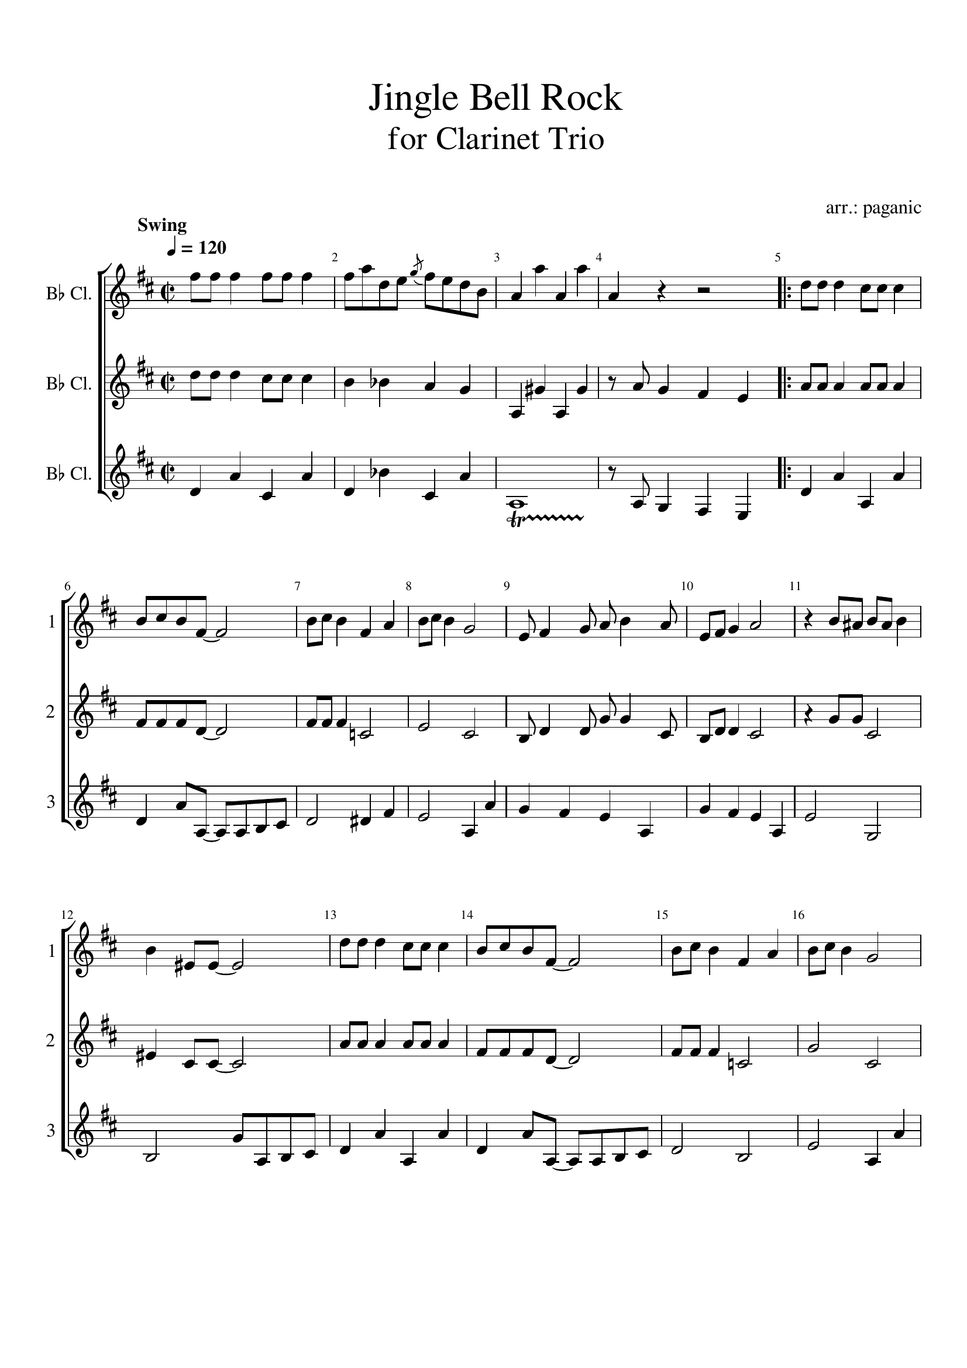 Bobby Helms - Jingle Bell Rock (for Clarinet Trio, 앙상블, 캐롤) (클라리넷 /트리오/ Clarinet Trio) by paganic